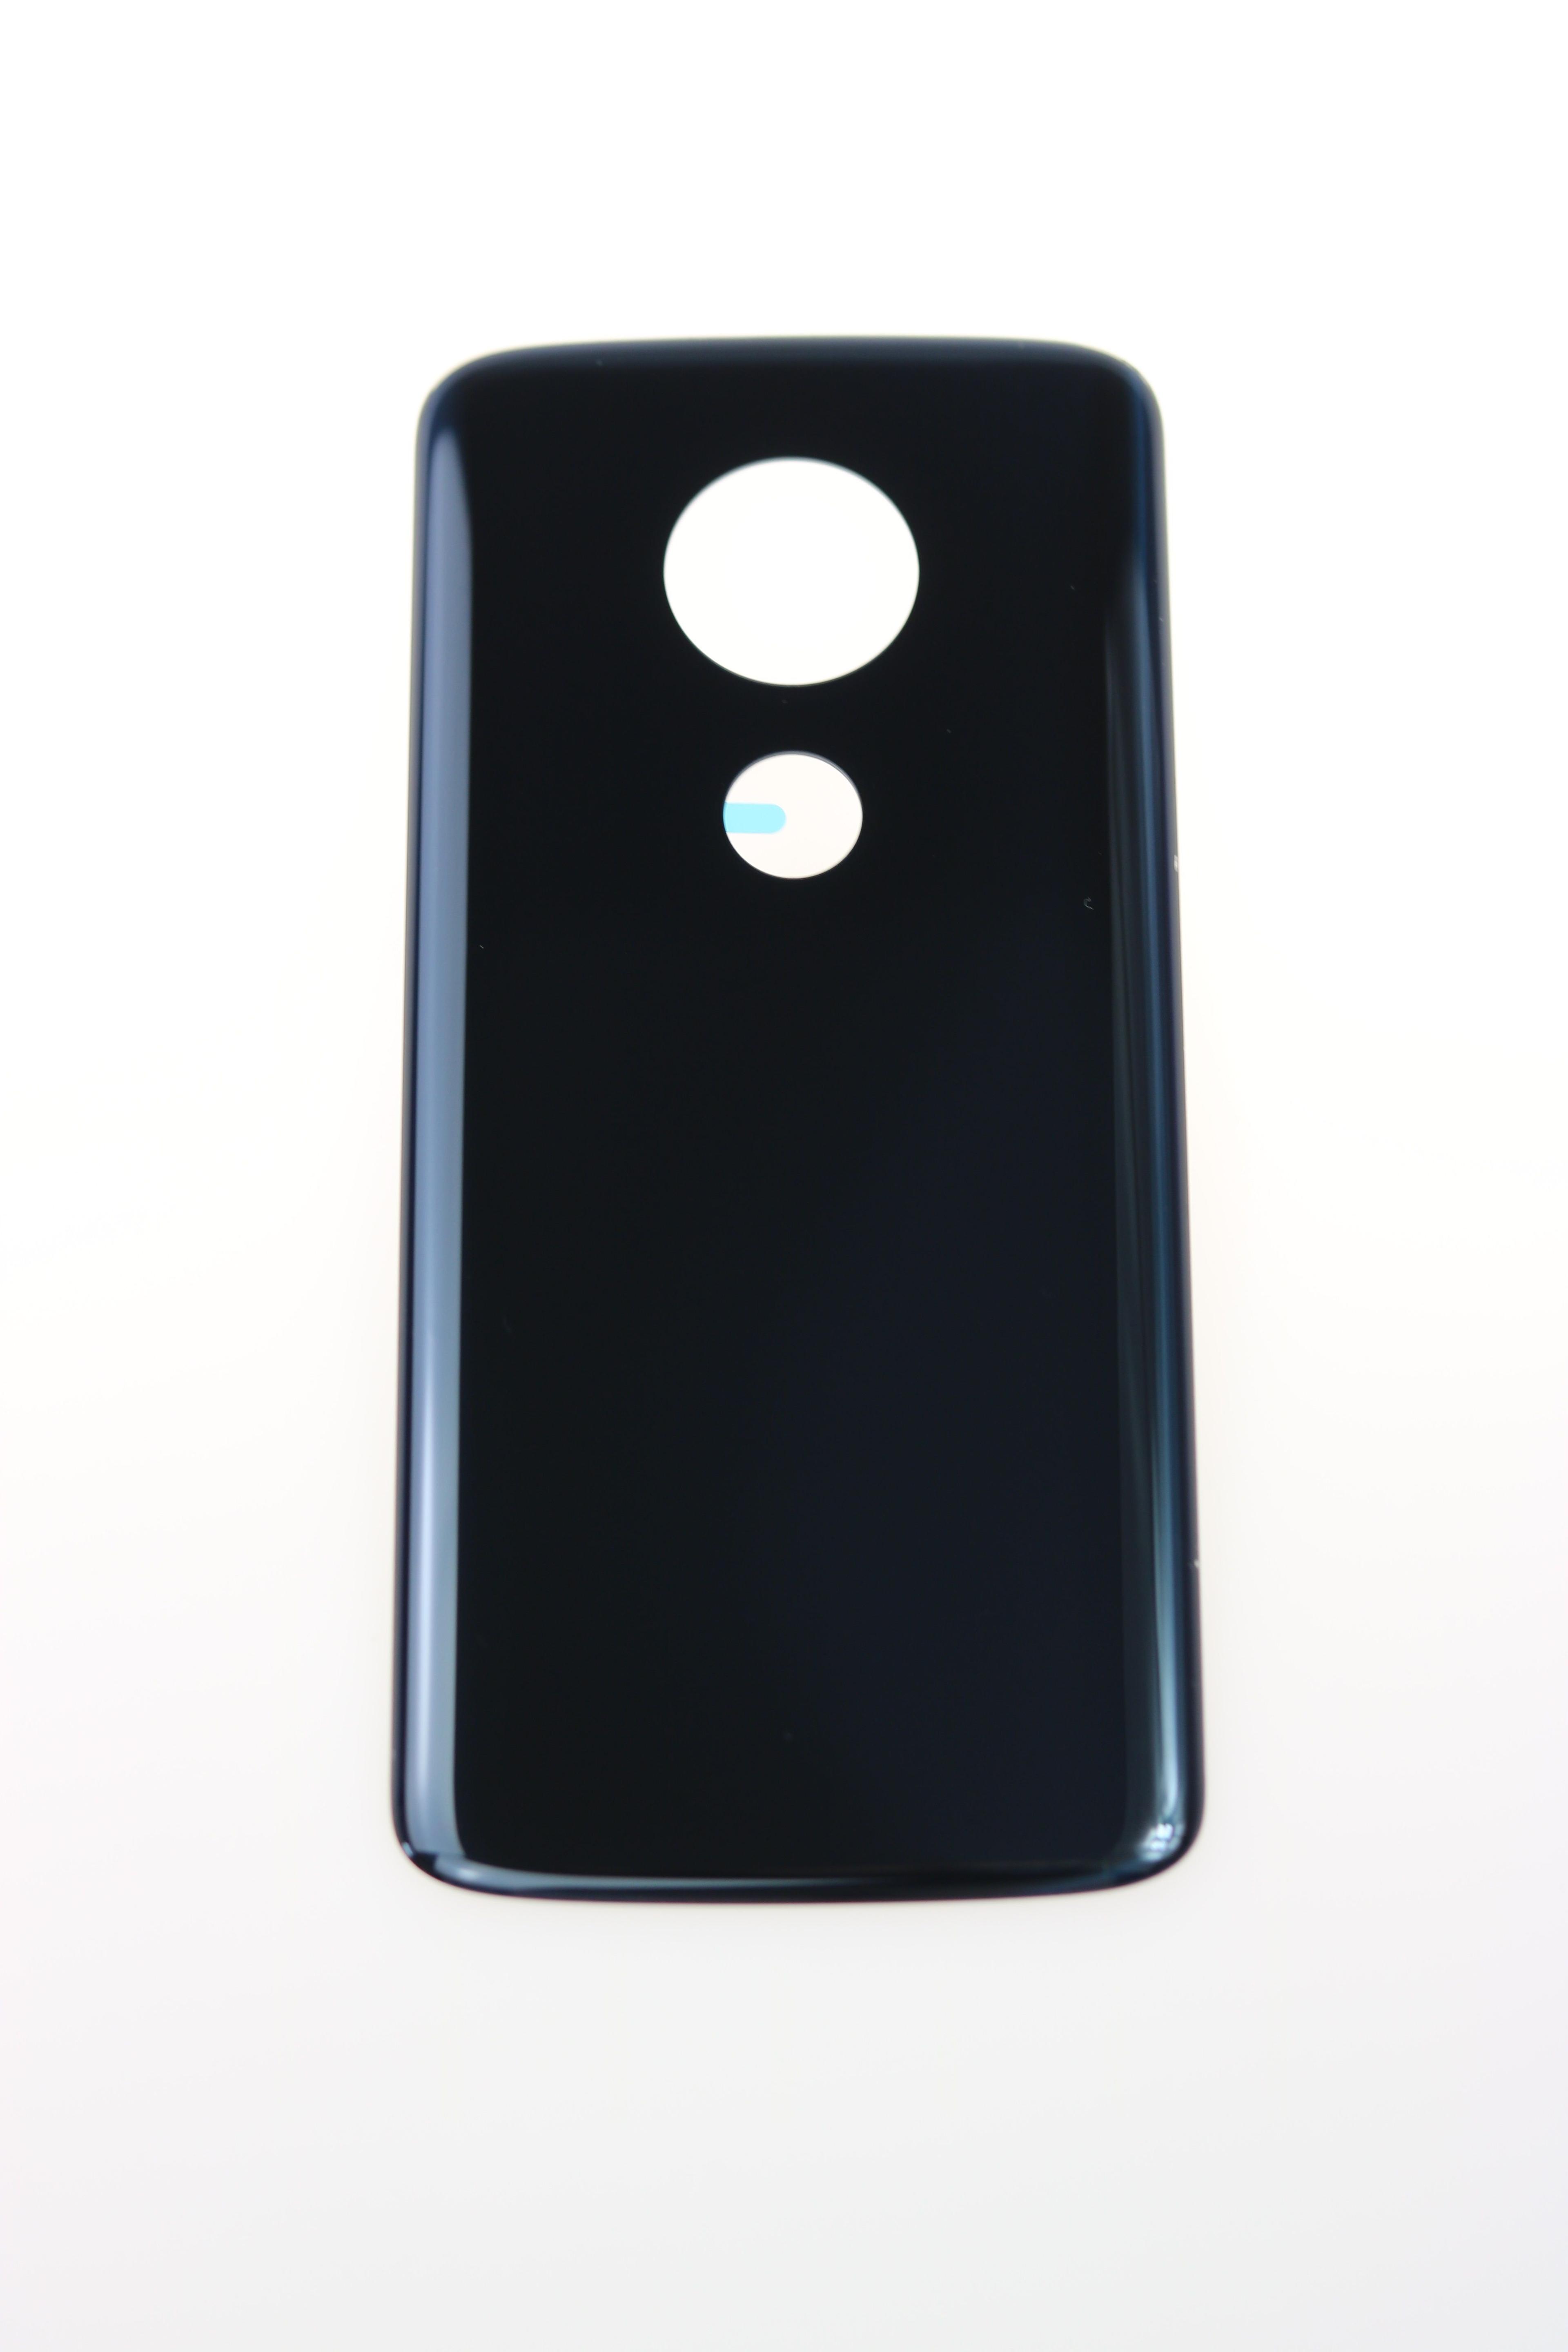 Battery cover Motorola Moto g6 play black